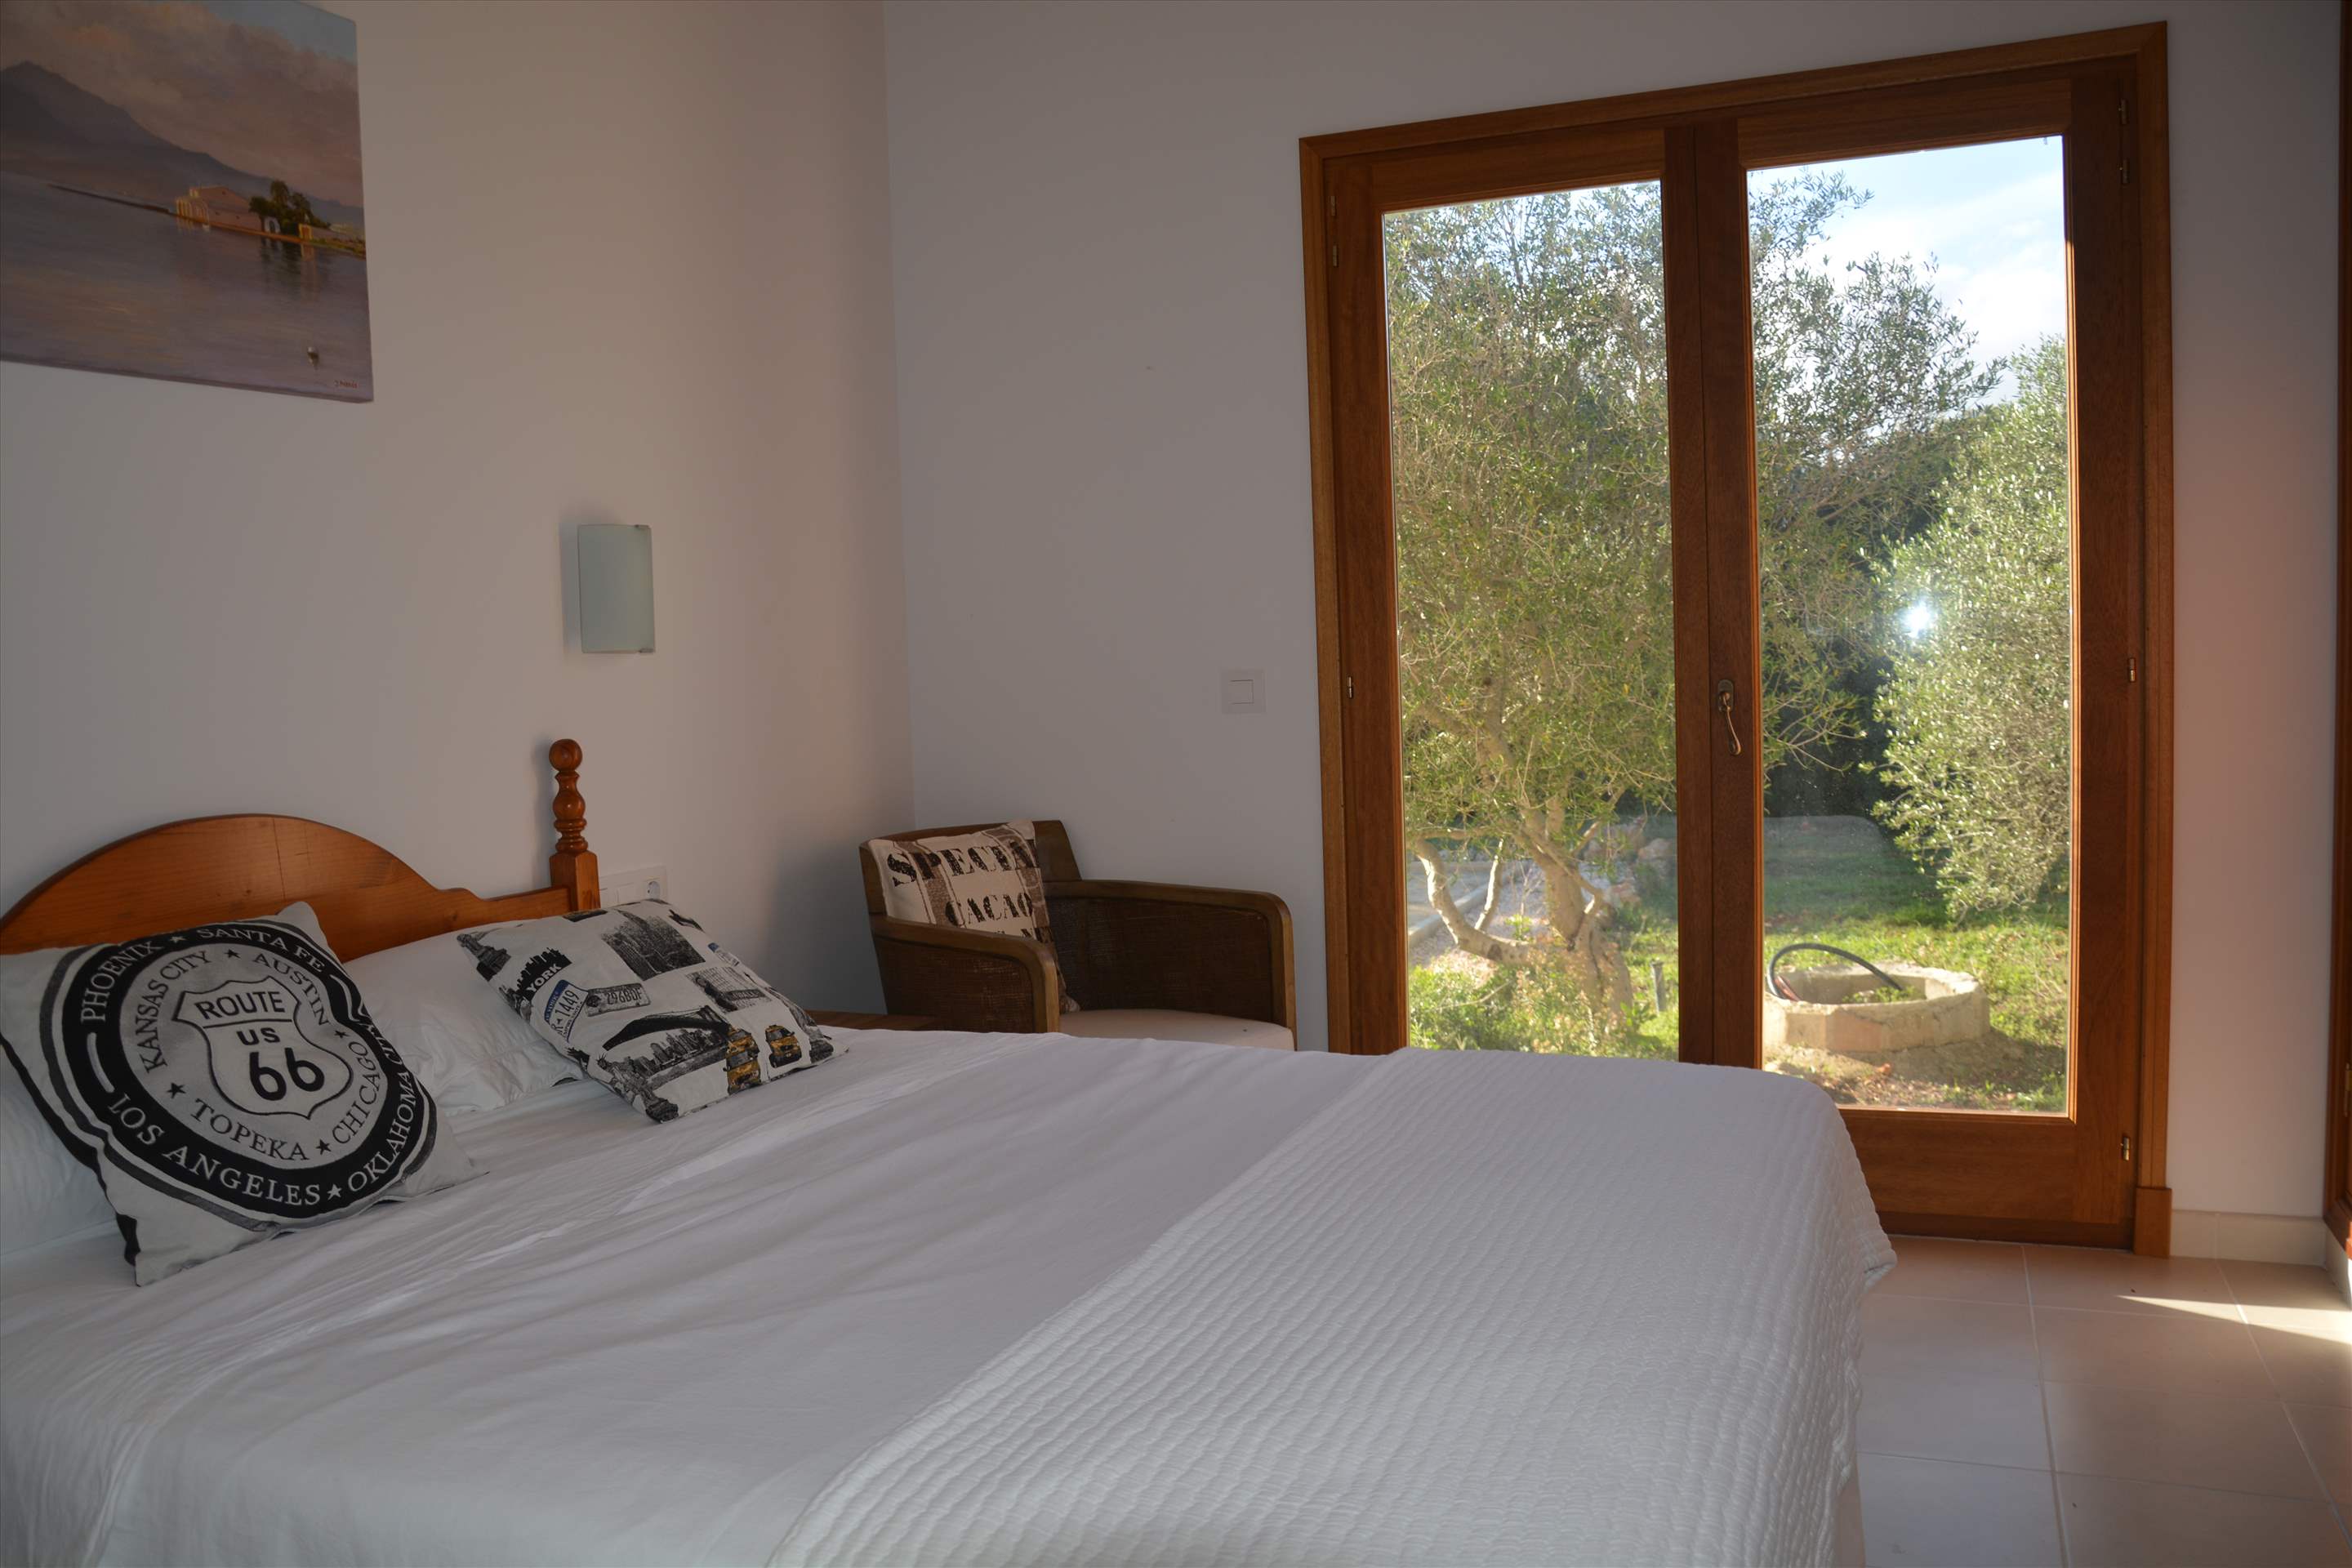 Les Arcs, 5 bedroom villa in Mahon, San Luis & South East, Menorca Photo #33